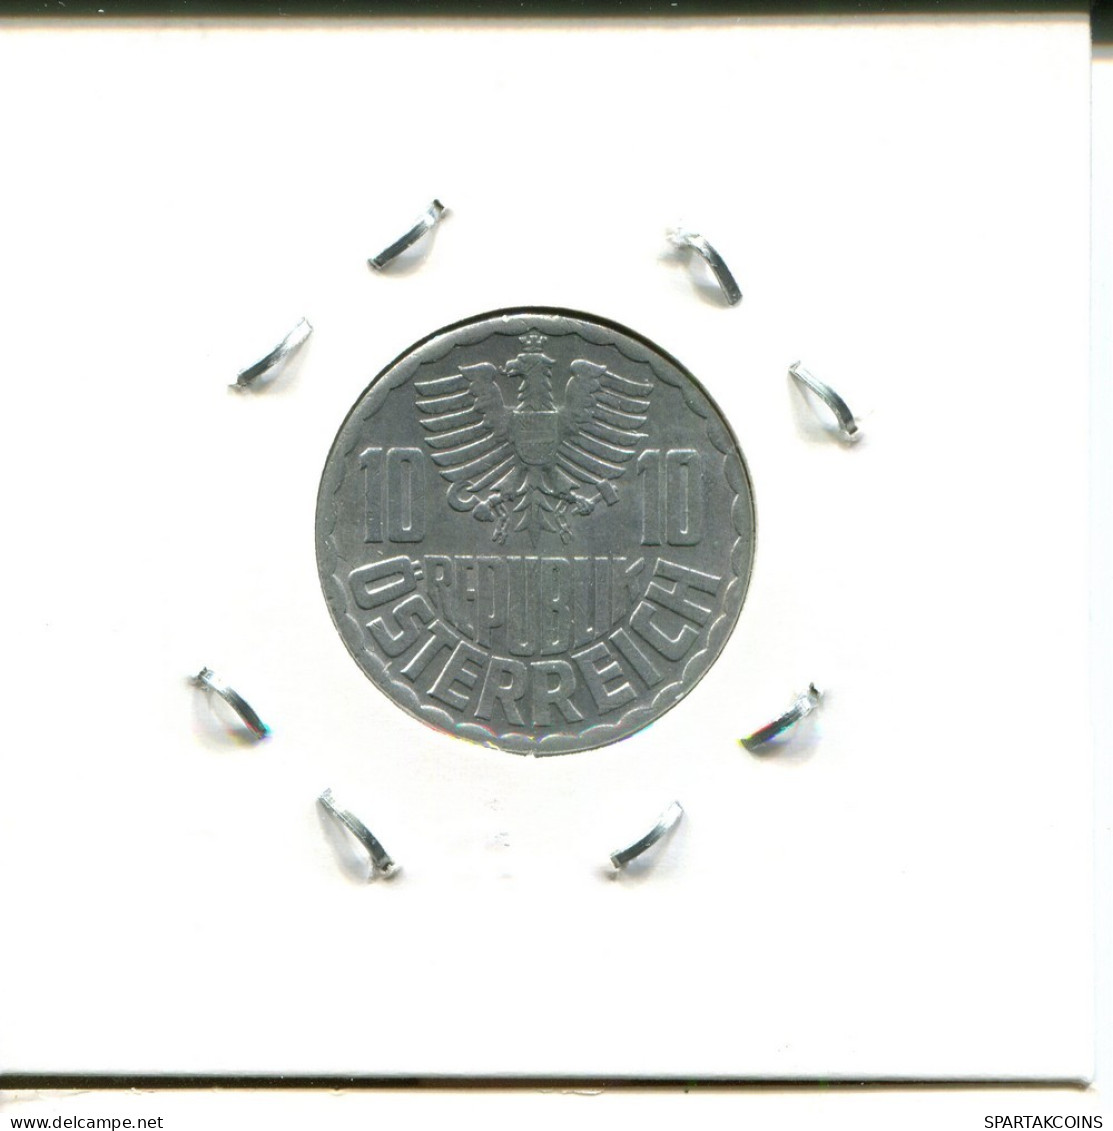 10 GROSCHEN 1970 AUSTRIA Coin #AT550.U.A - Autriche